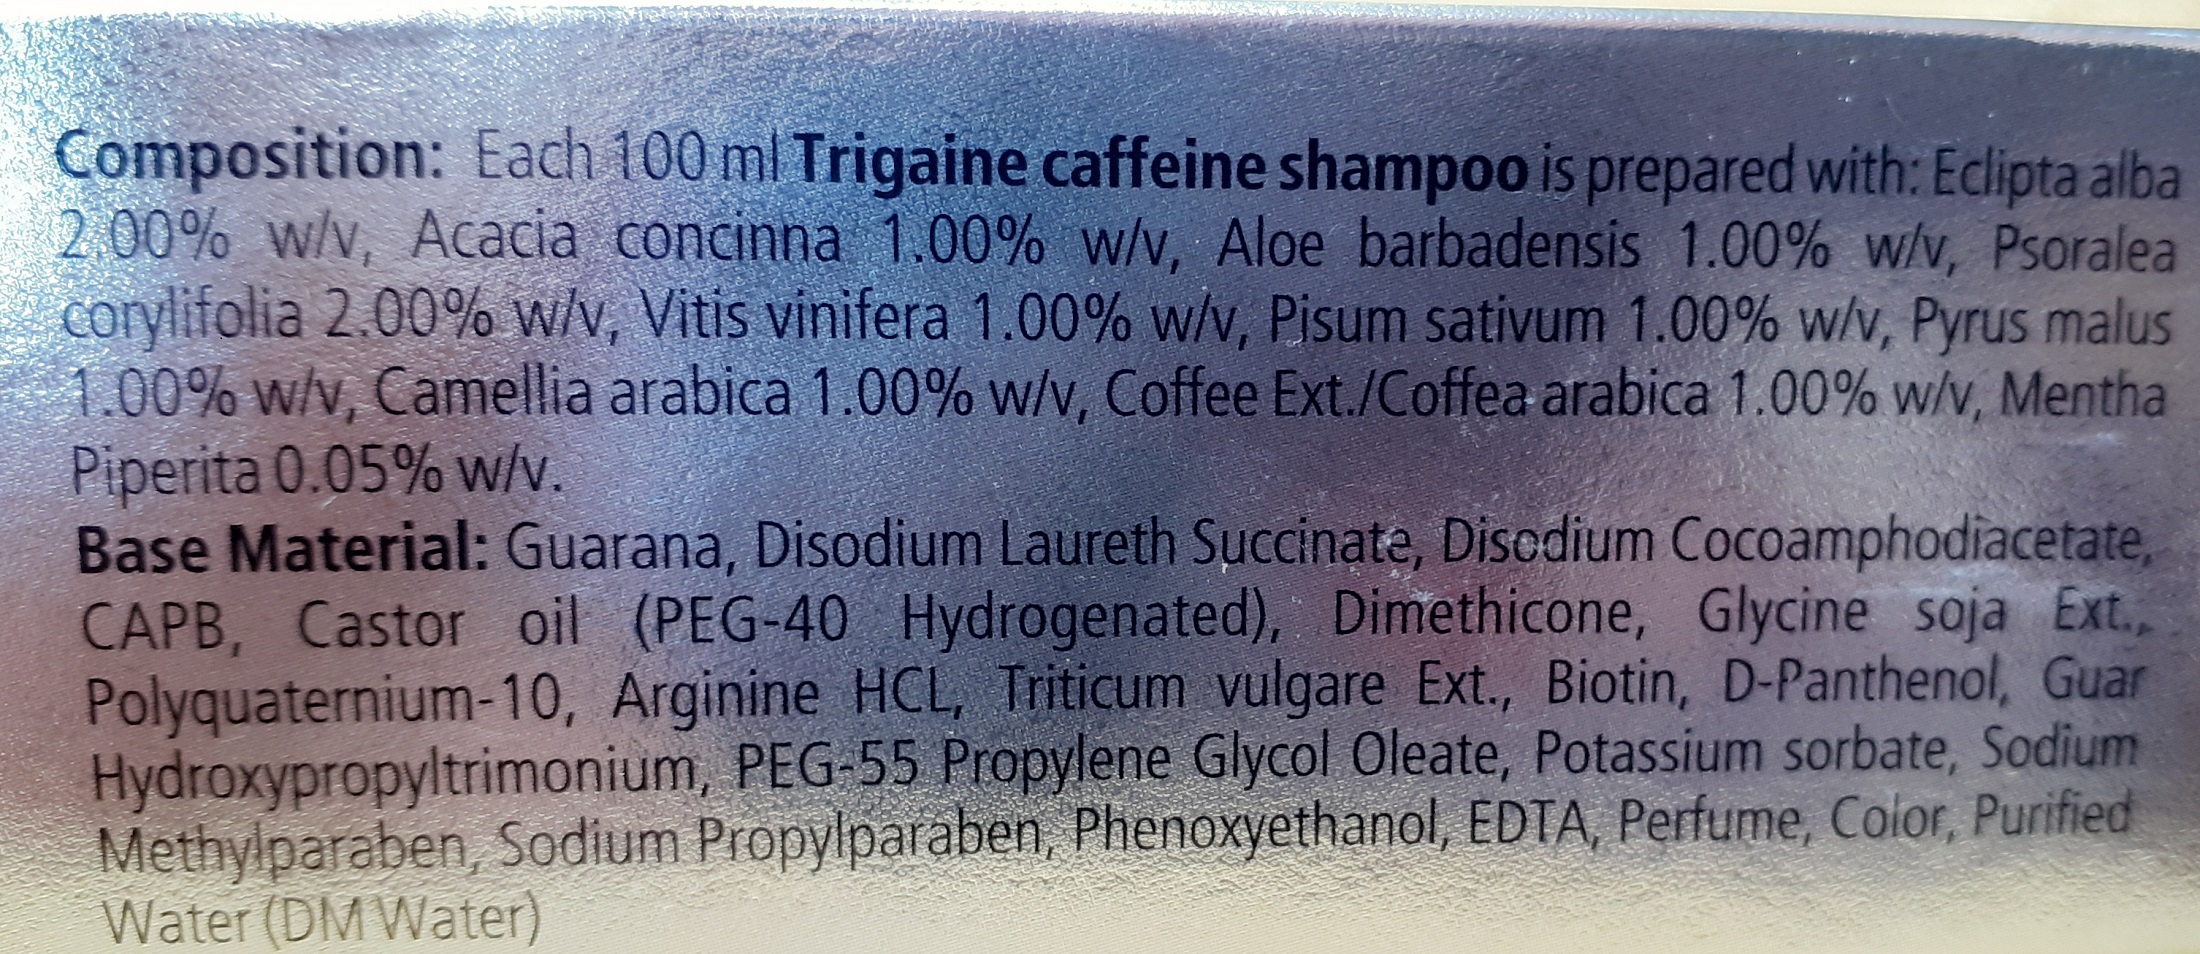 Trigaine caffeine shampoo ingredients